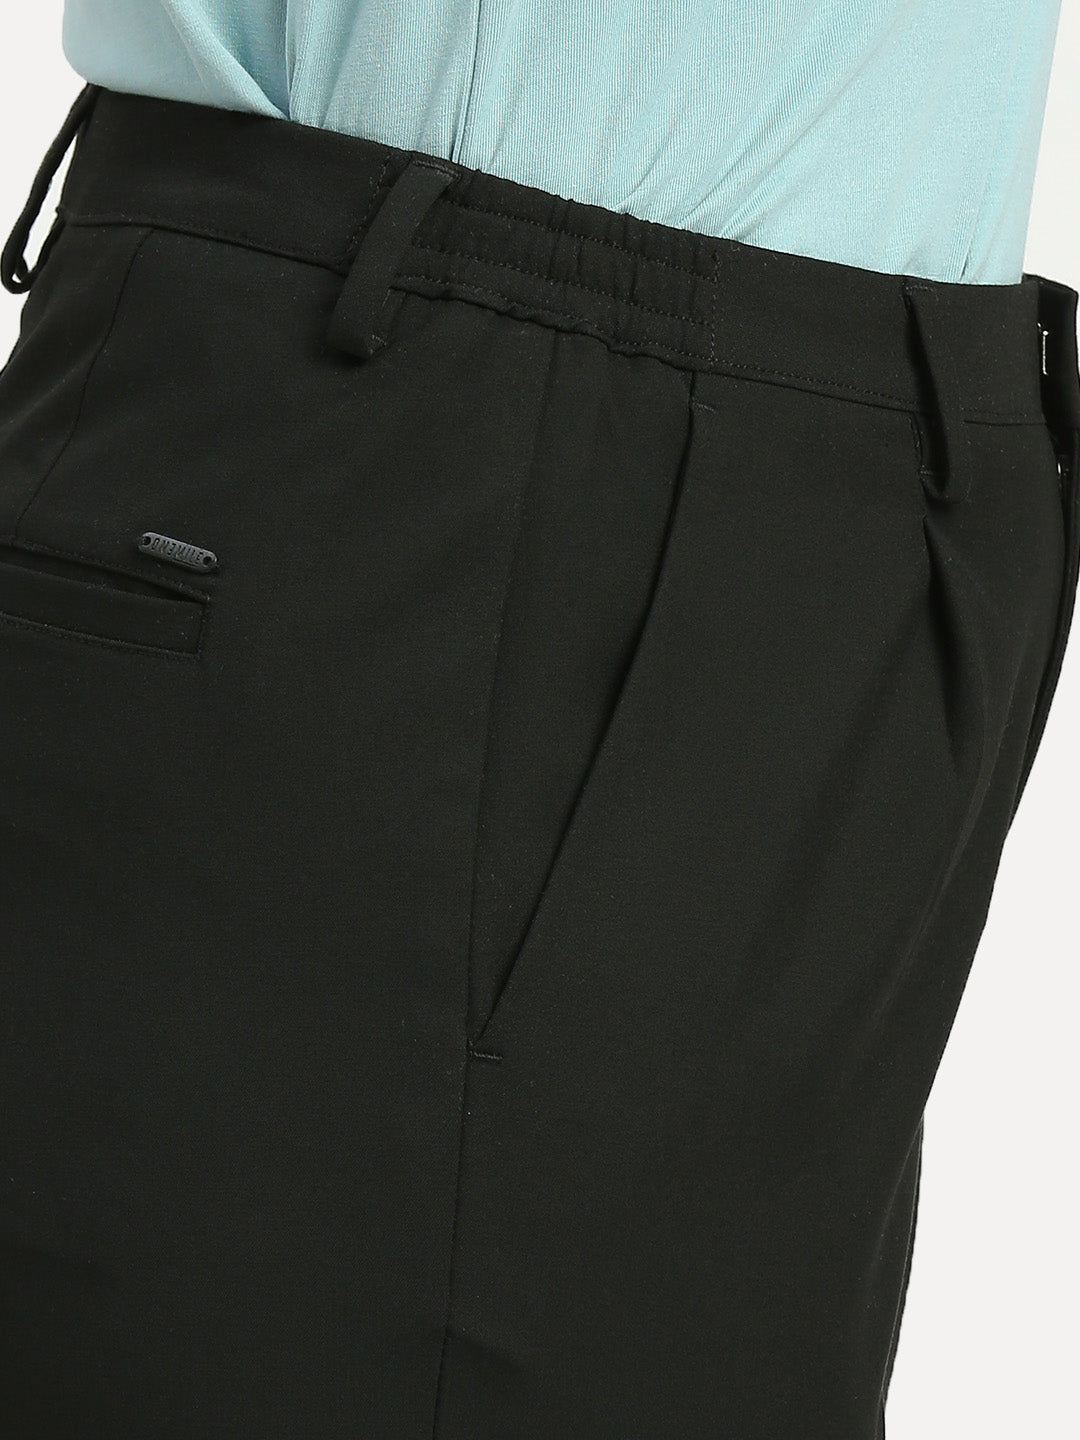 Hyperflex Black Eclectic Trouser - For Women